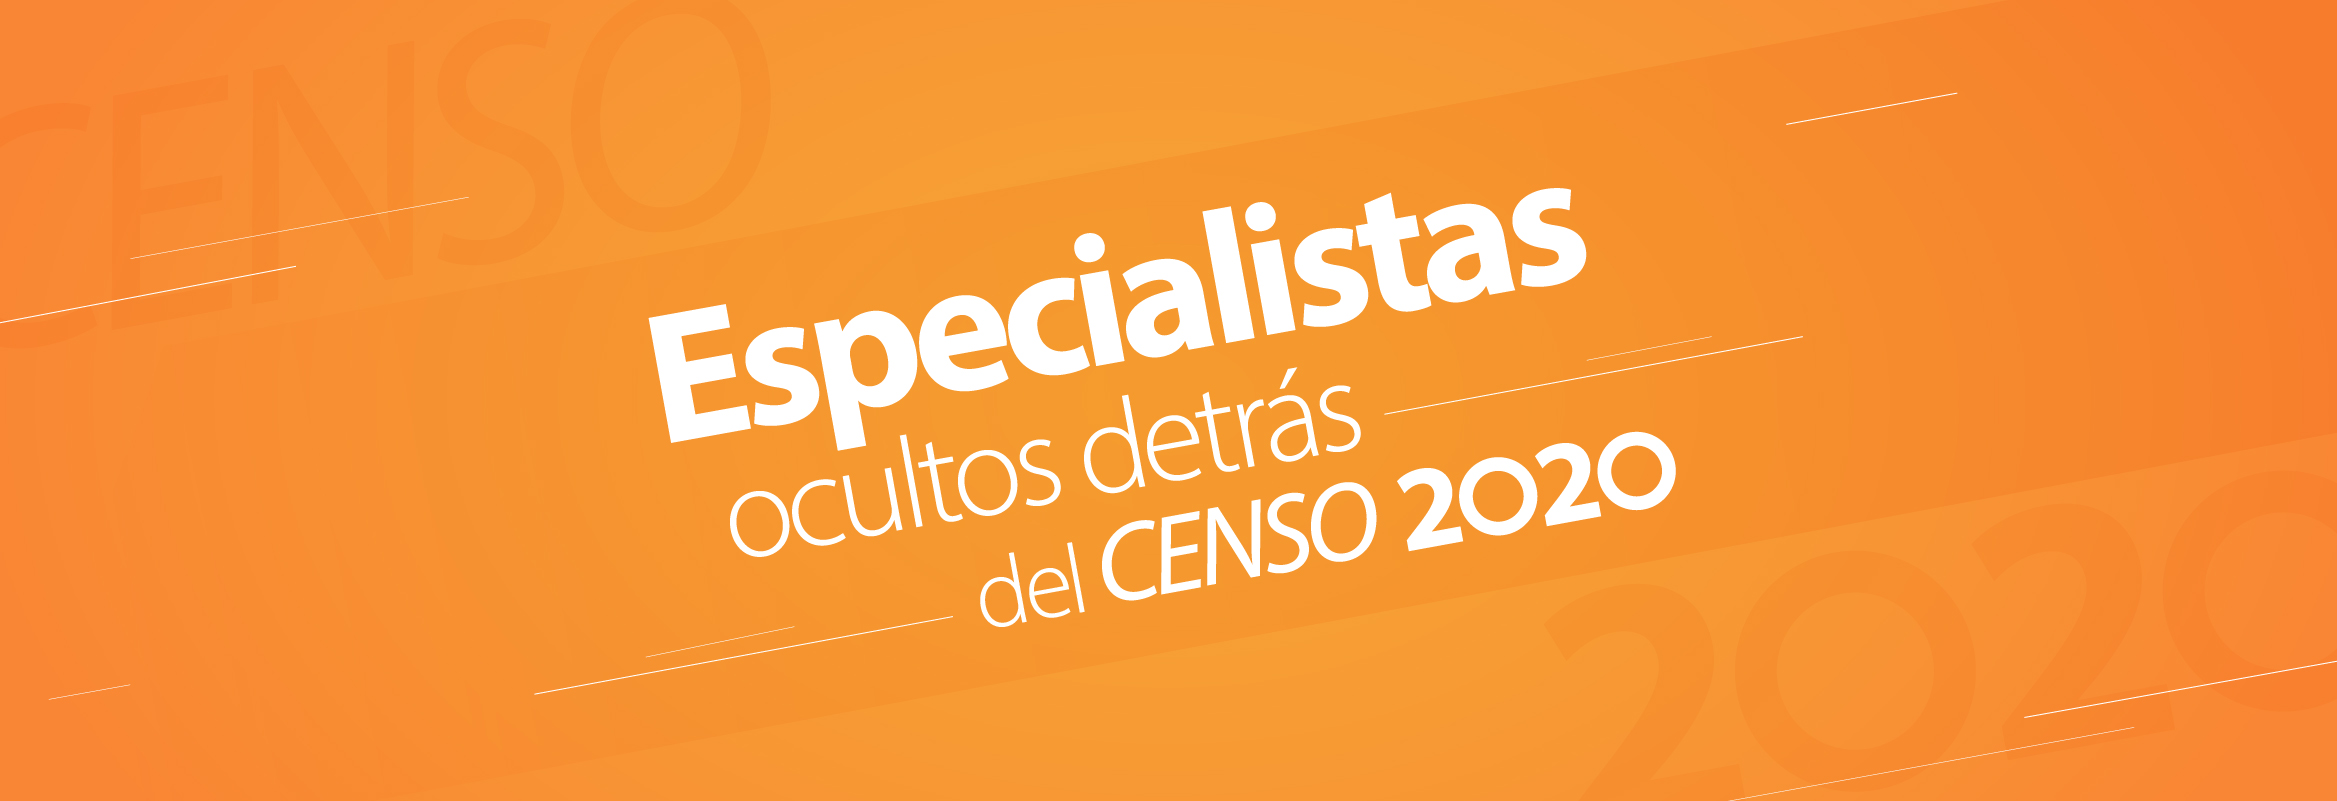 Texto blanco sobre fondo naranja: Especialistas ocultos detrás del CENSO 2020